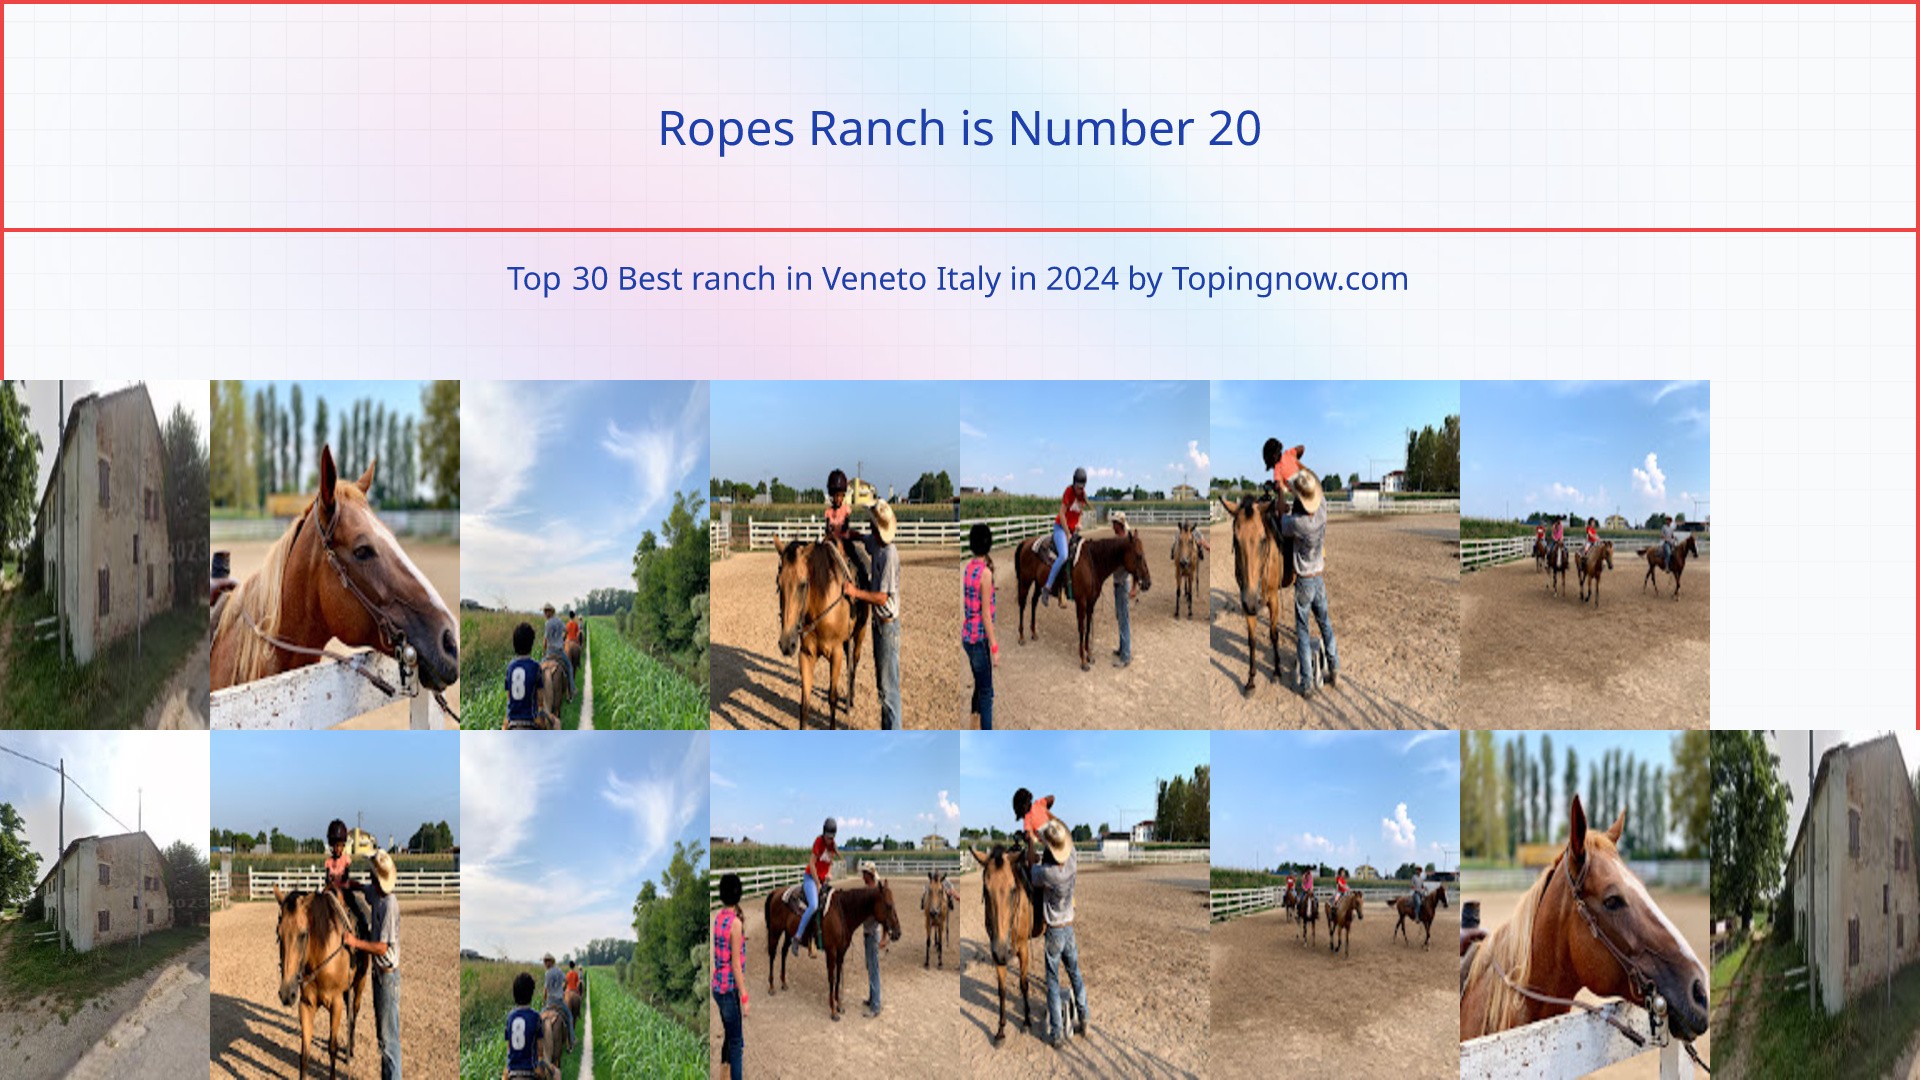 Ropes Ranch: Top 30 Best ranch in Veneto Italy in 2024